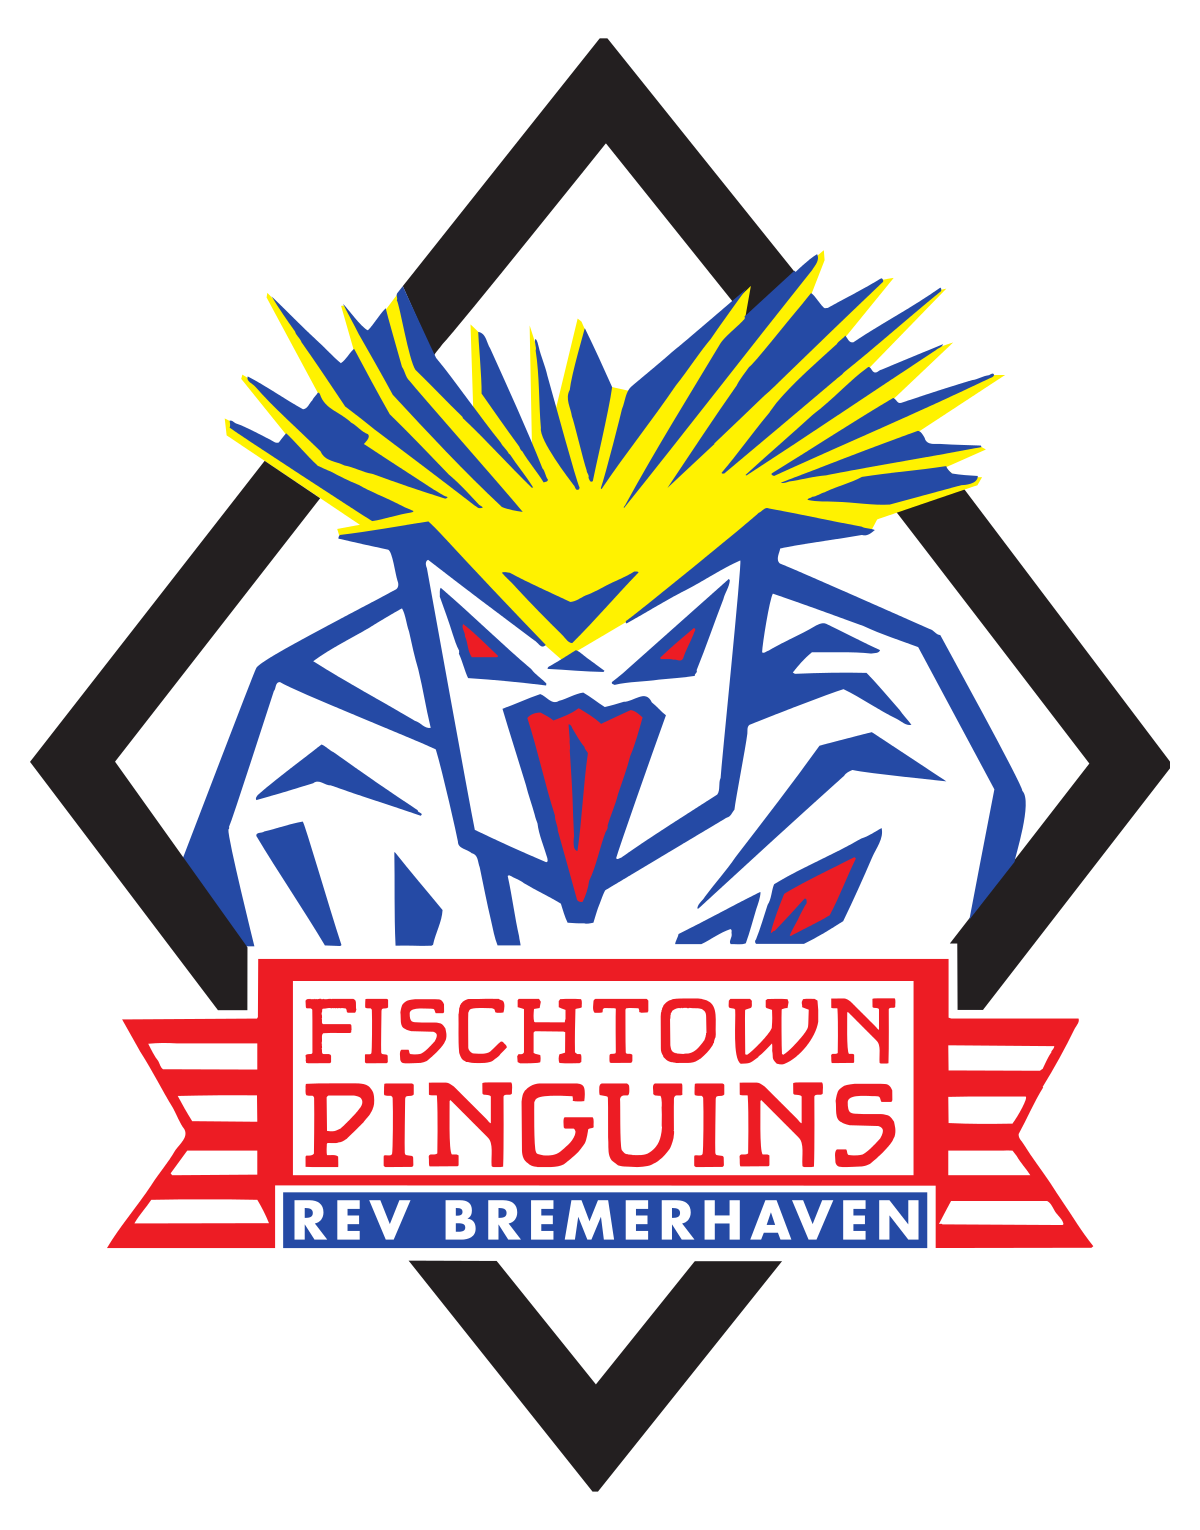 Fishtown Pinguins Bremerhaven - team logo